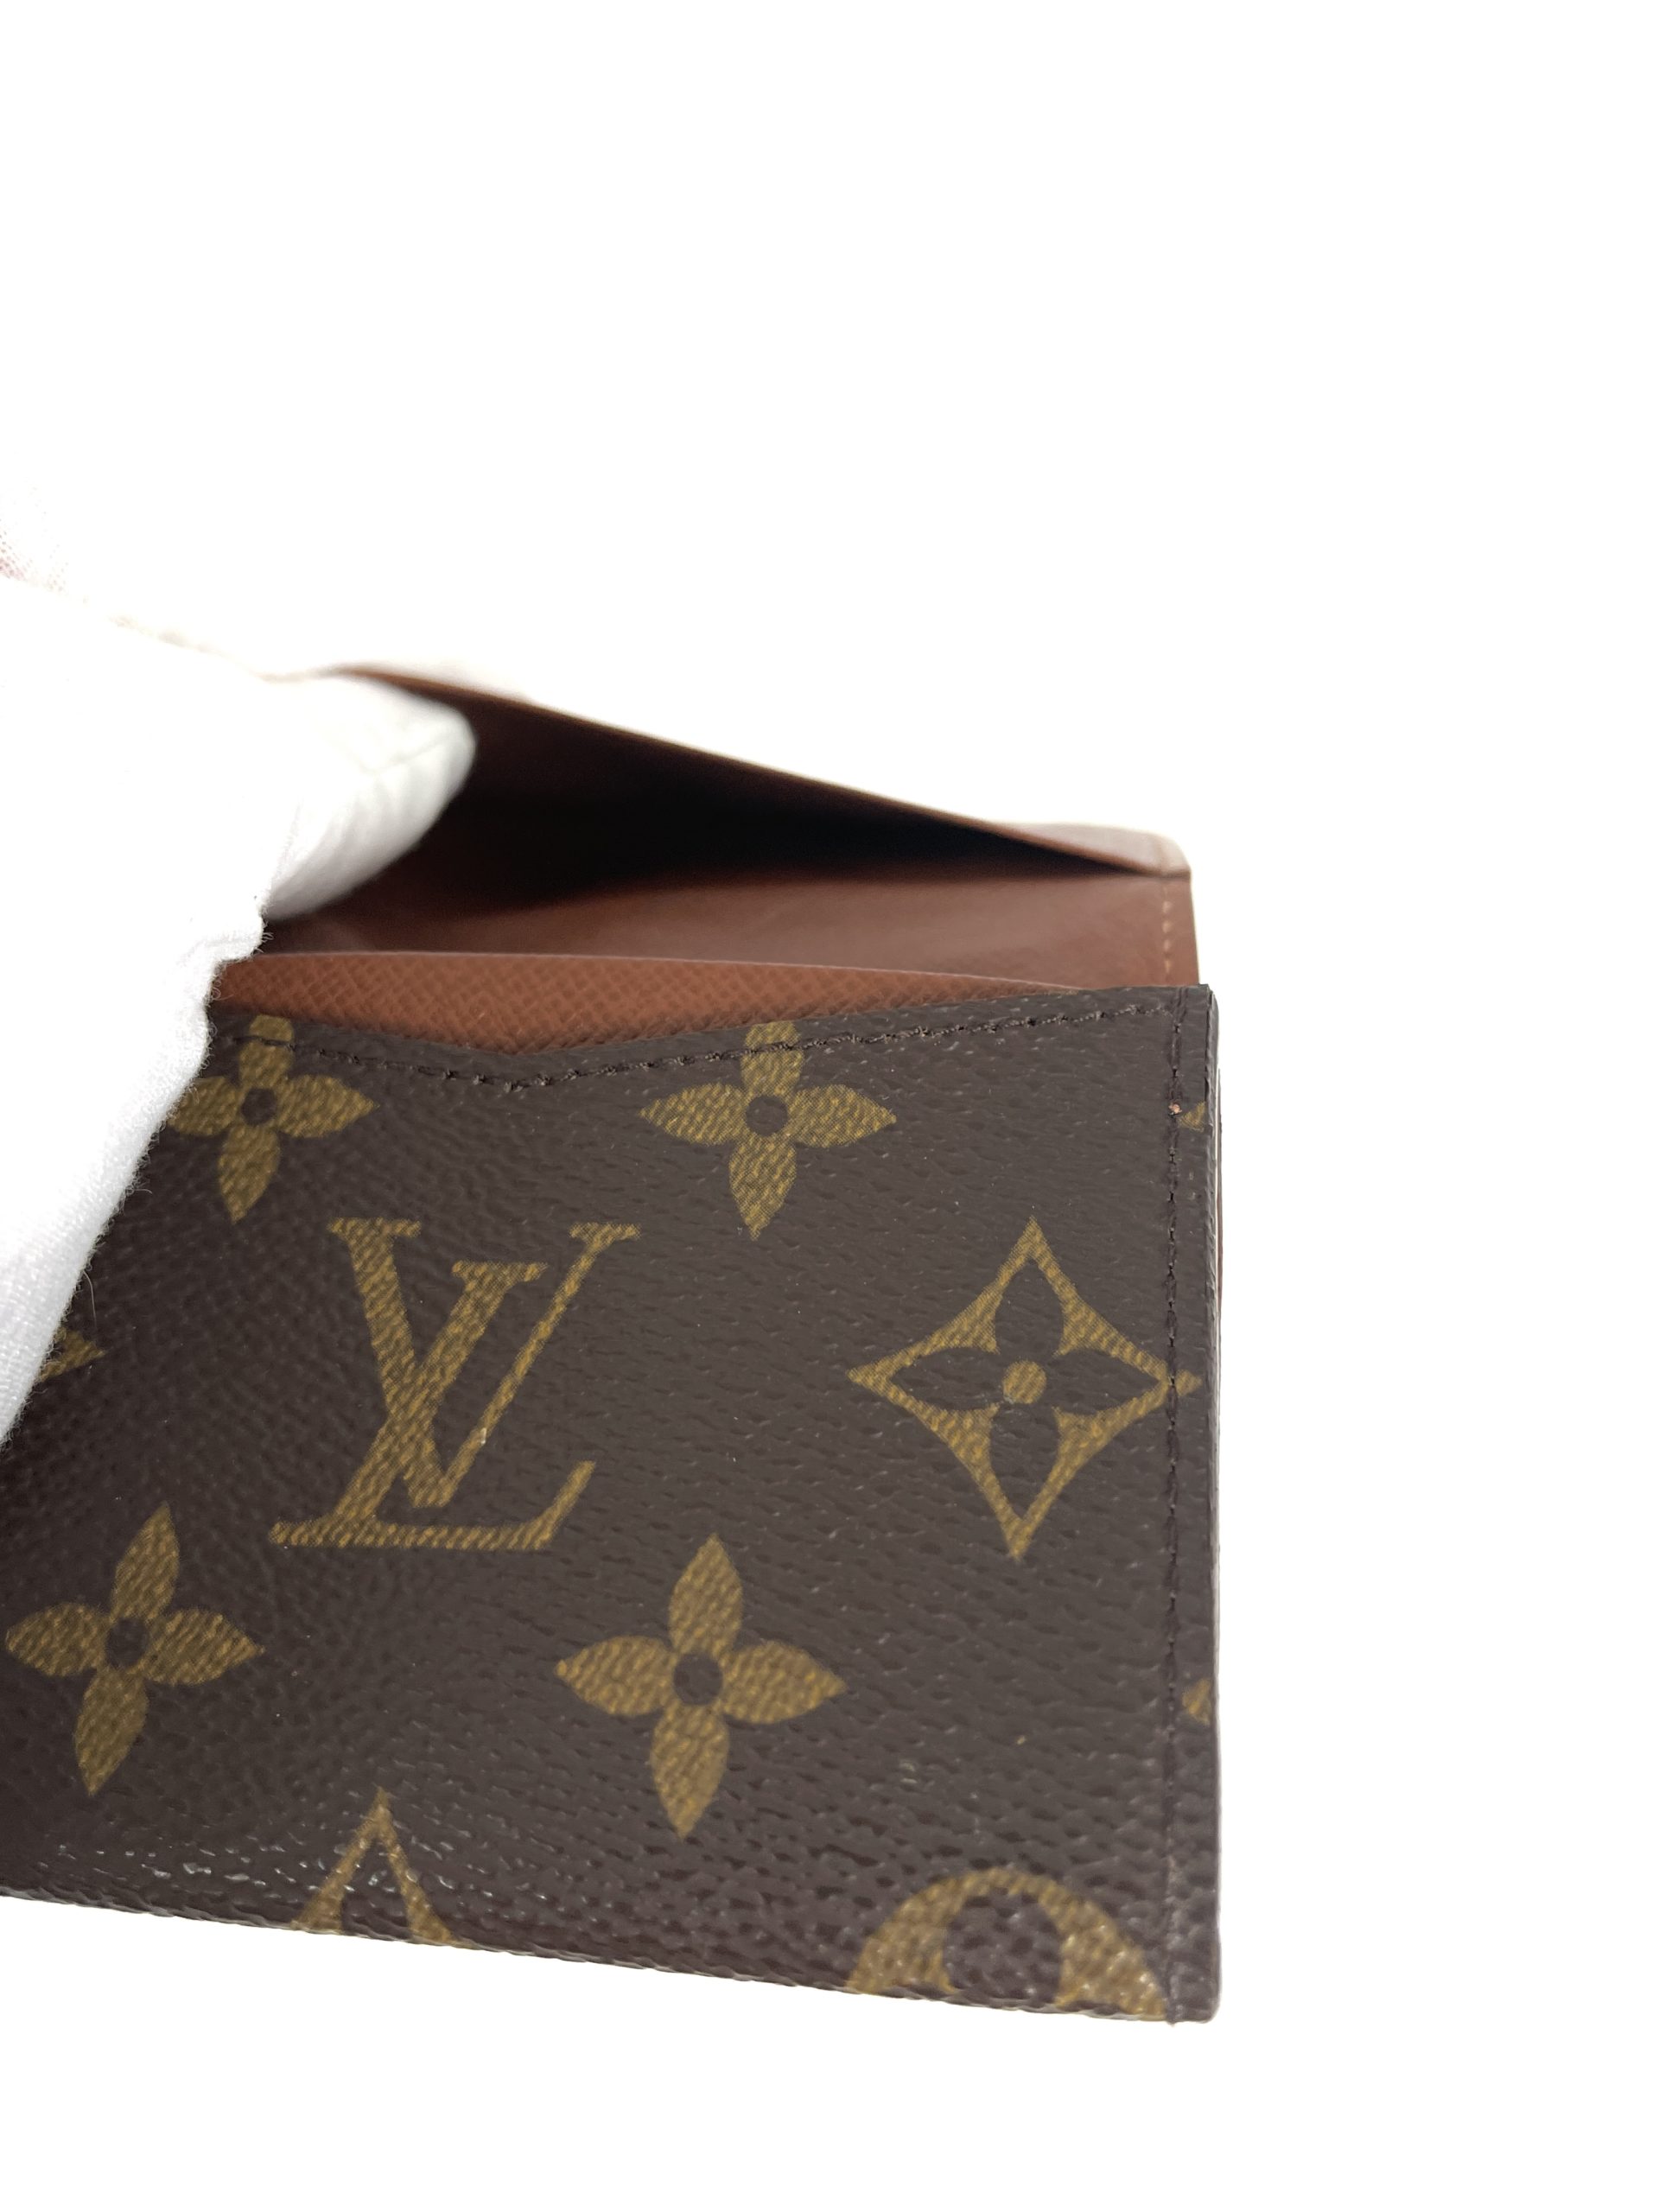 Louis Vuitton Money Envelopes Box Set VIP Only Classic Gold Monogram RARE